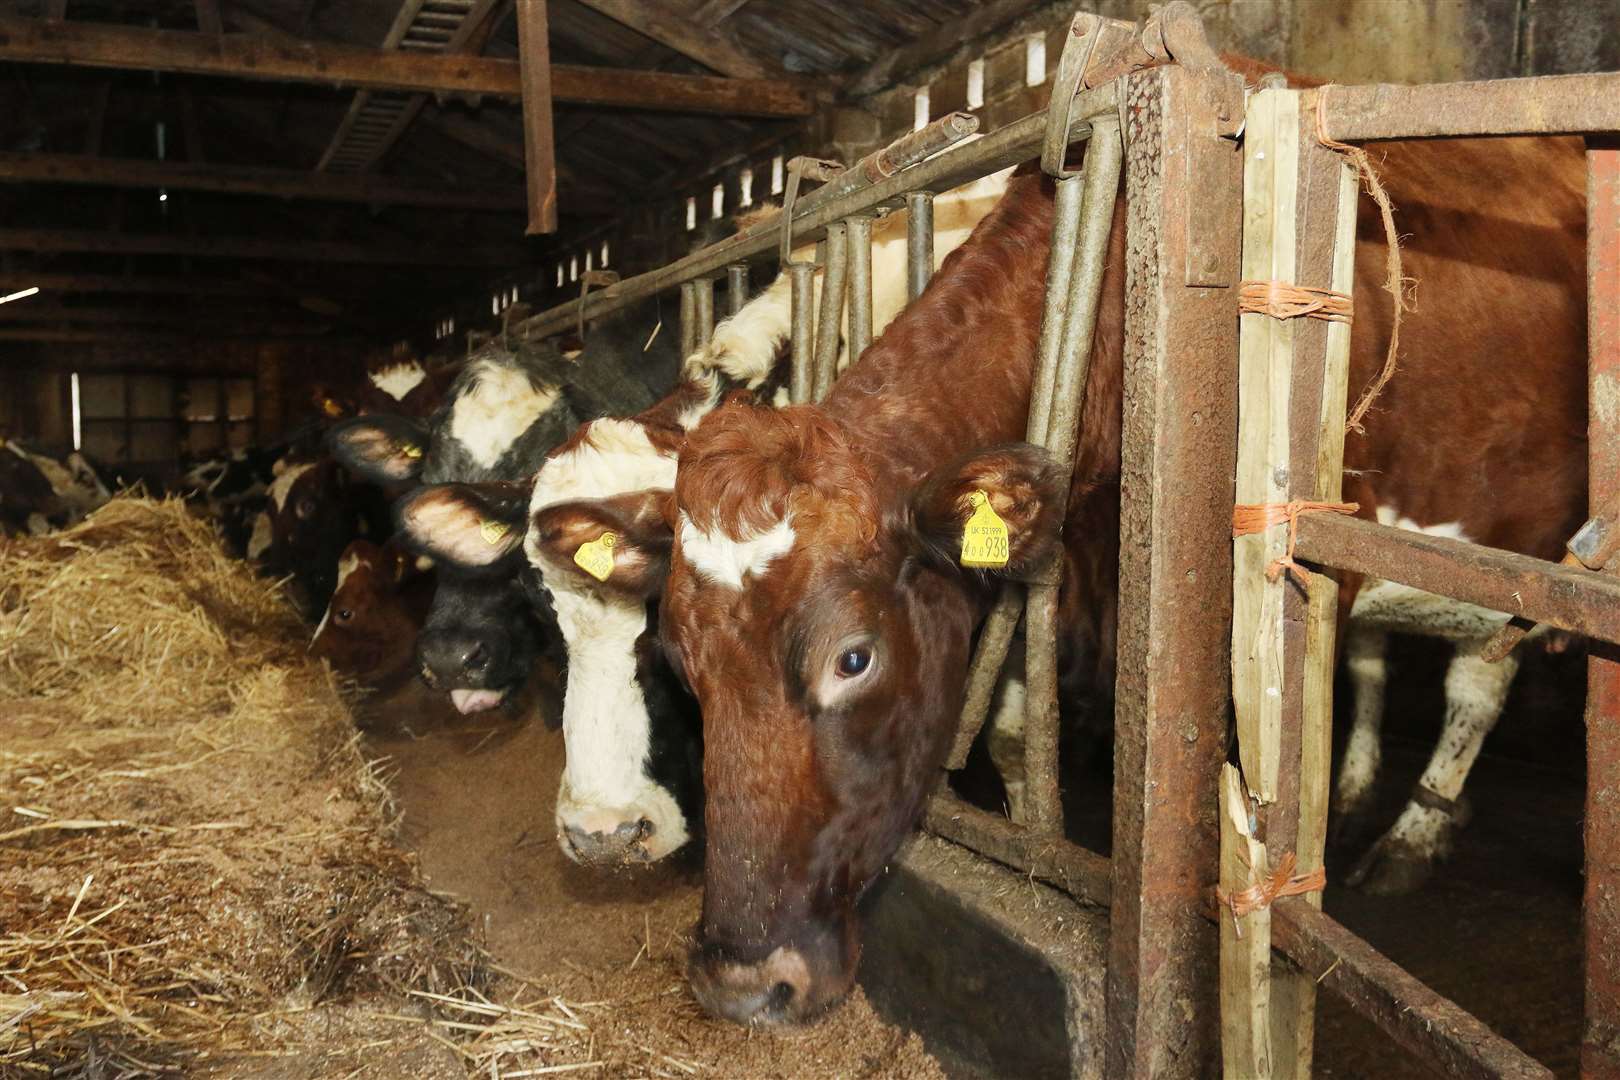 Ayrshire cattle help produce a high quality milk.